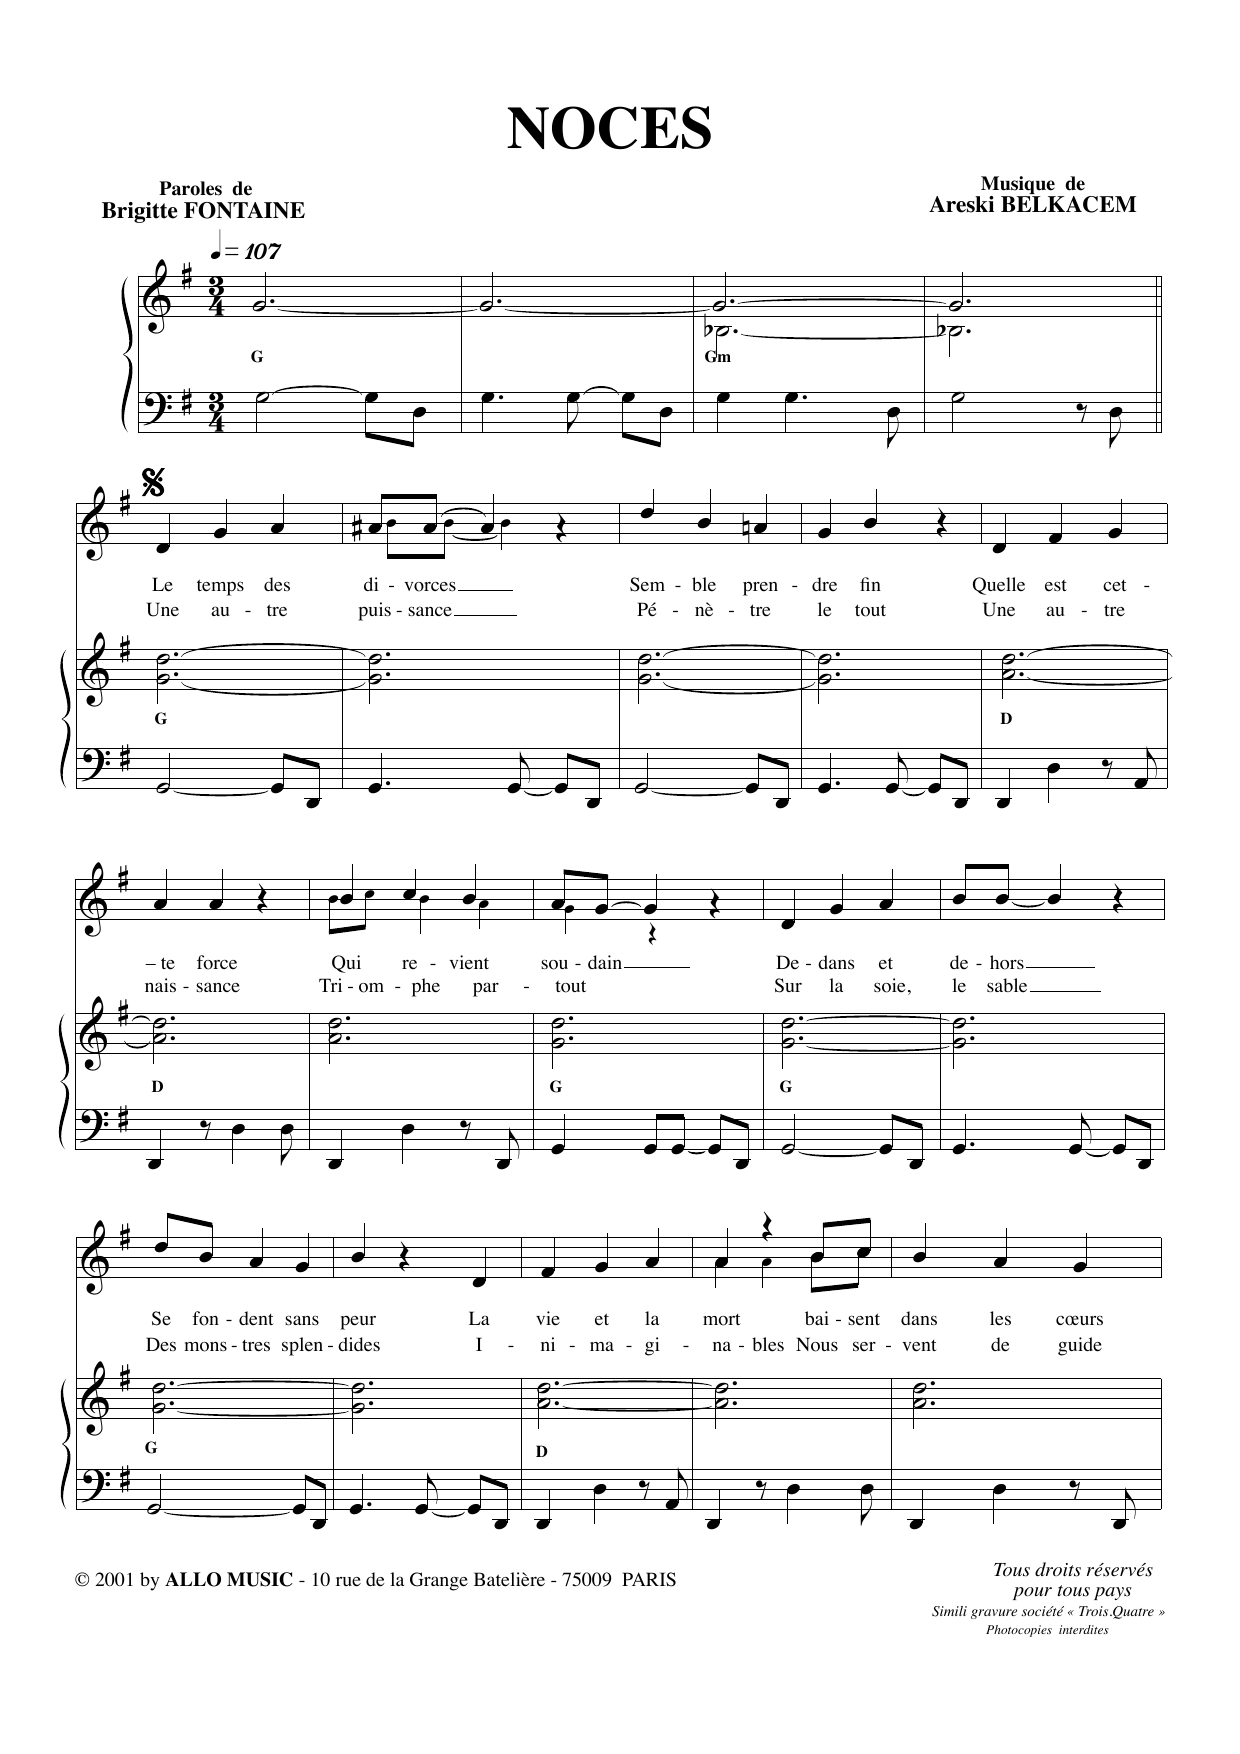 Brigitte Fontaine & Areski Belkacem Noces Sheet Music Notes & Chords for Piano & Vocal - Download or Print PDF